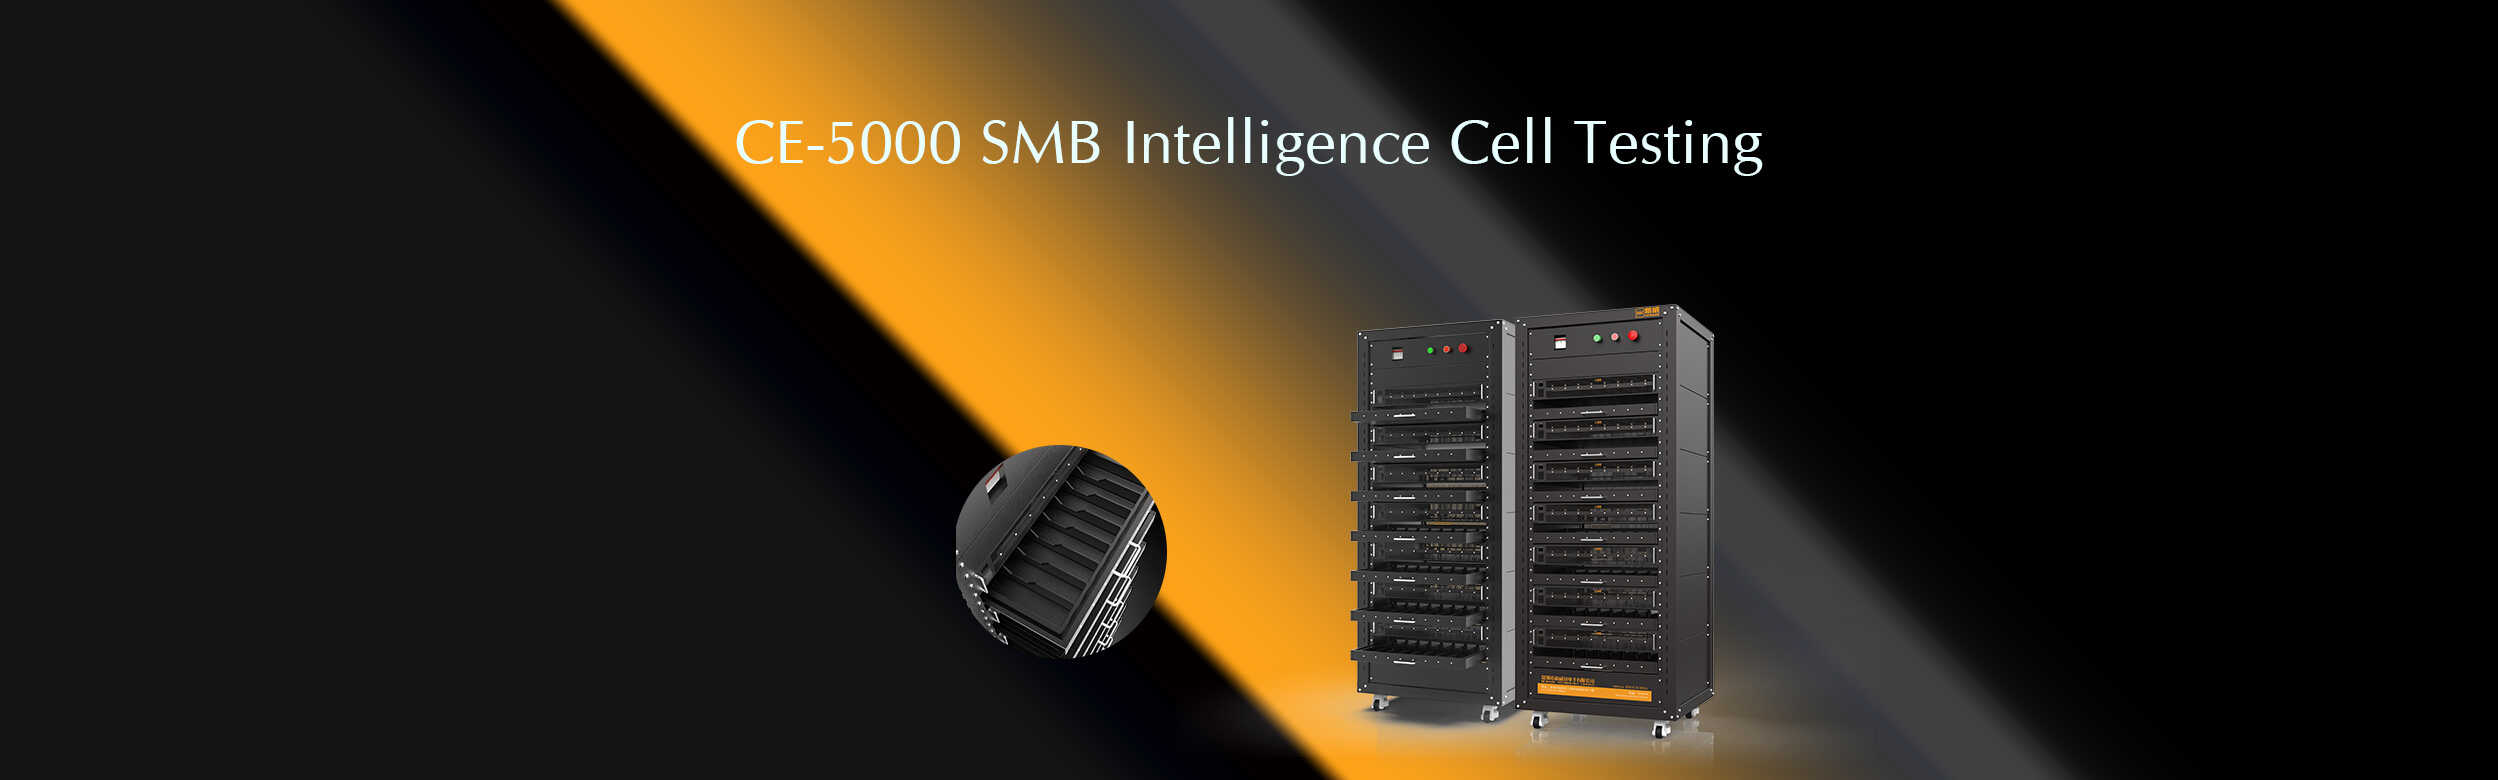 SMB Intelligence Cell Testing